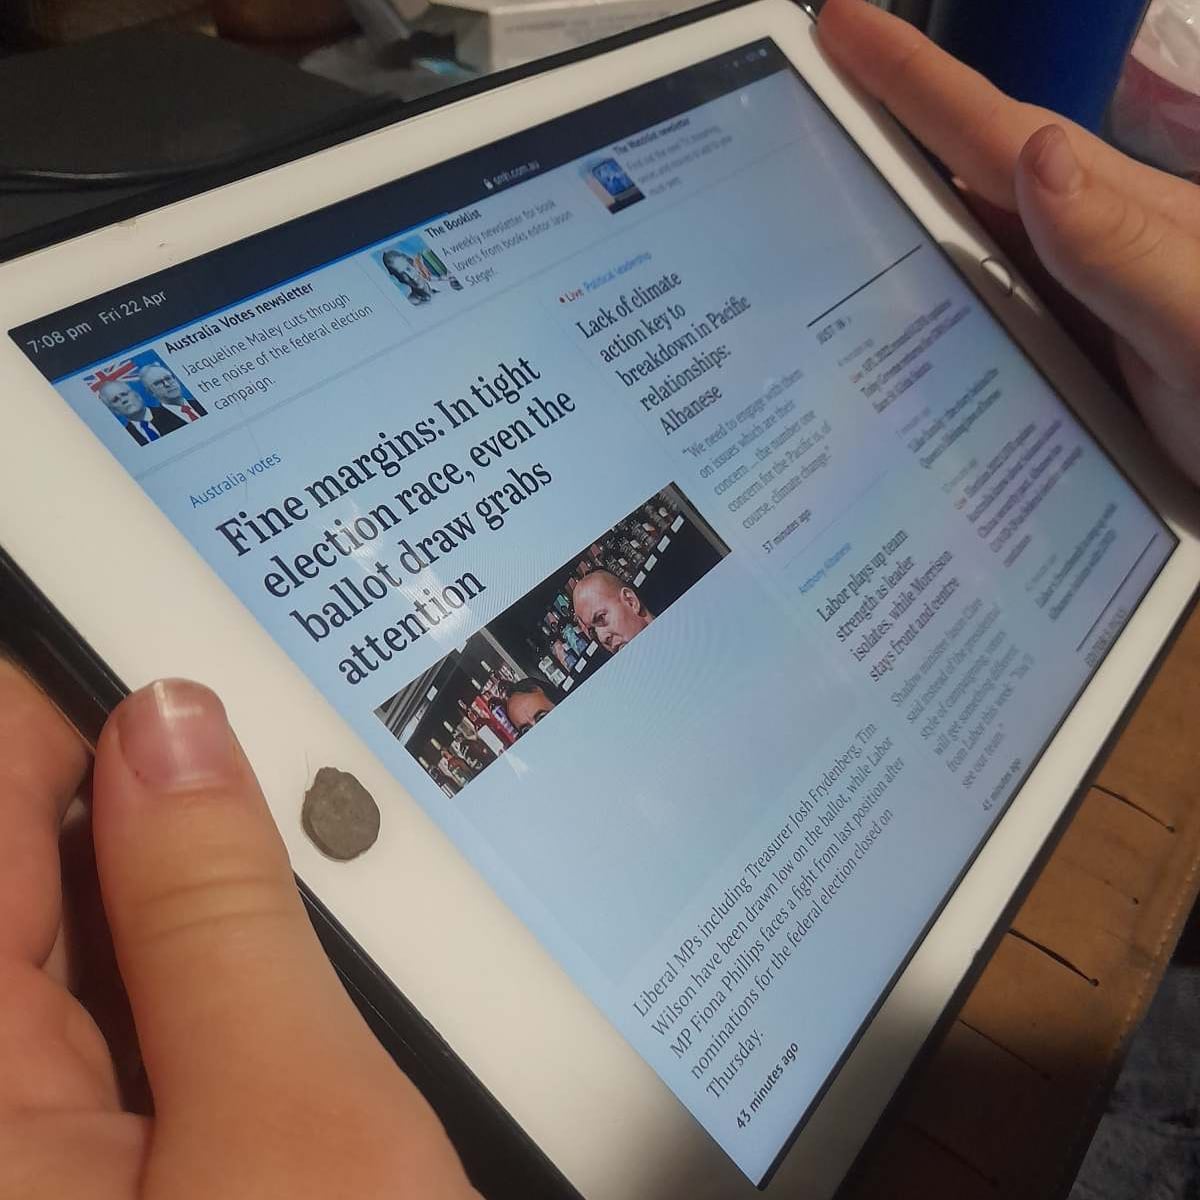 A news website displayed on an iPad